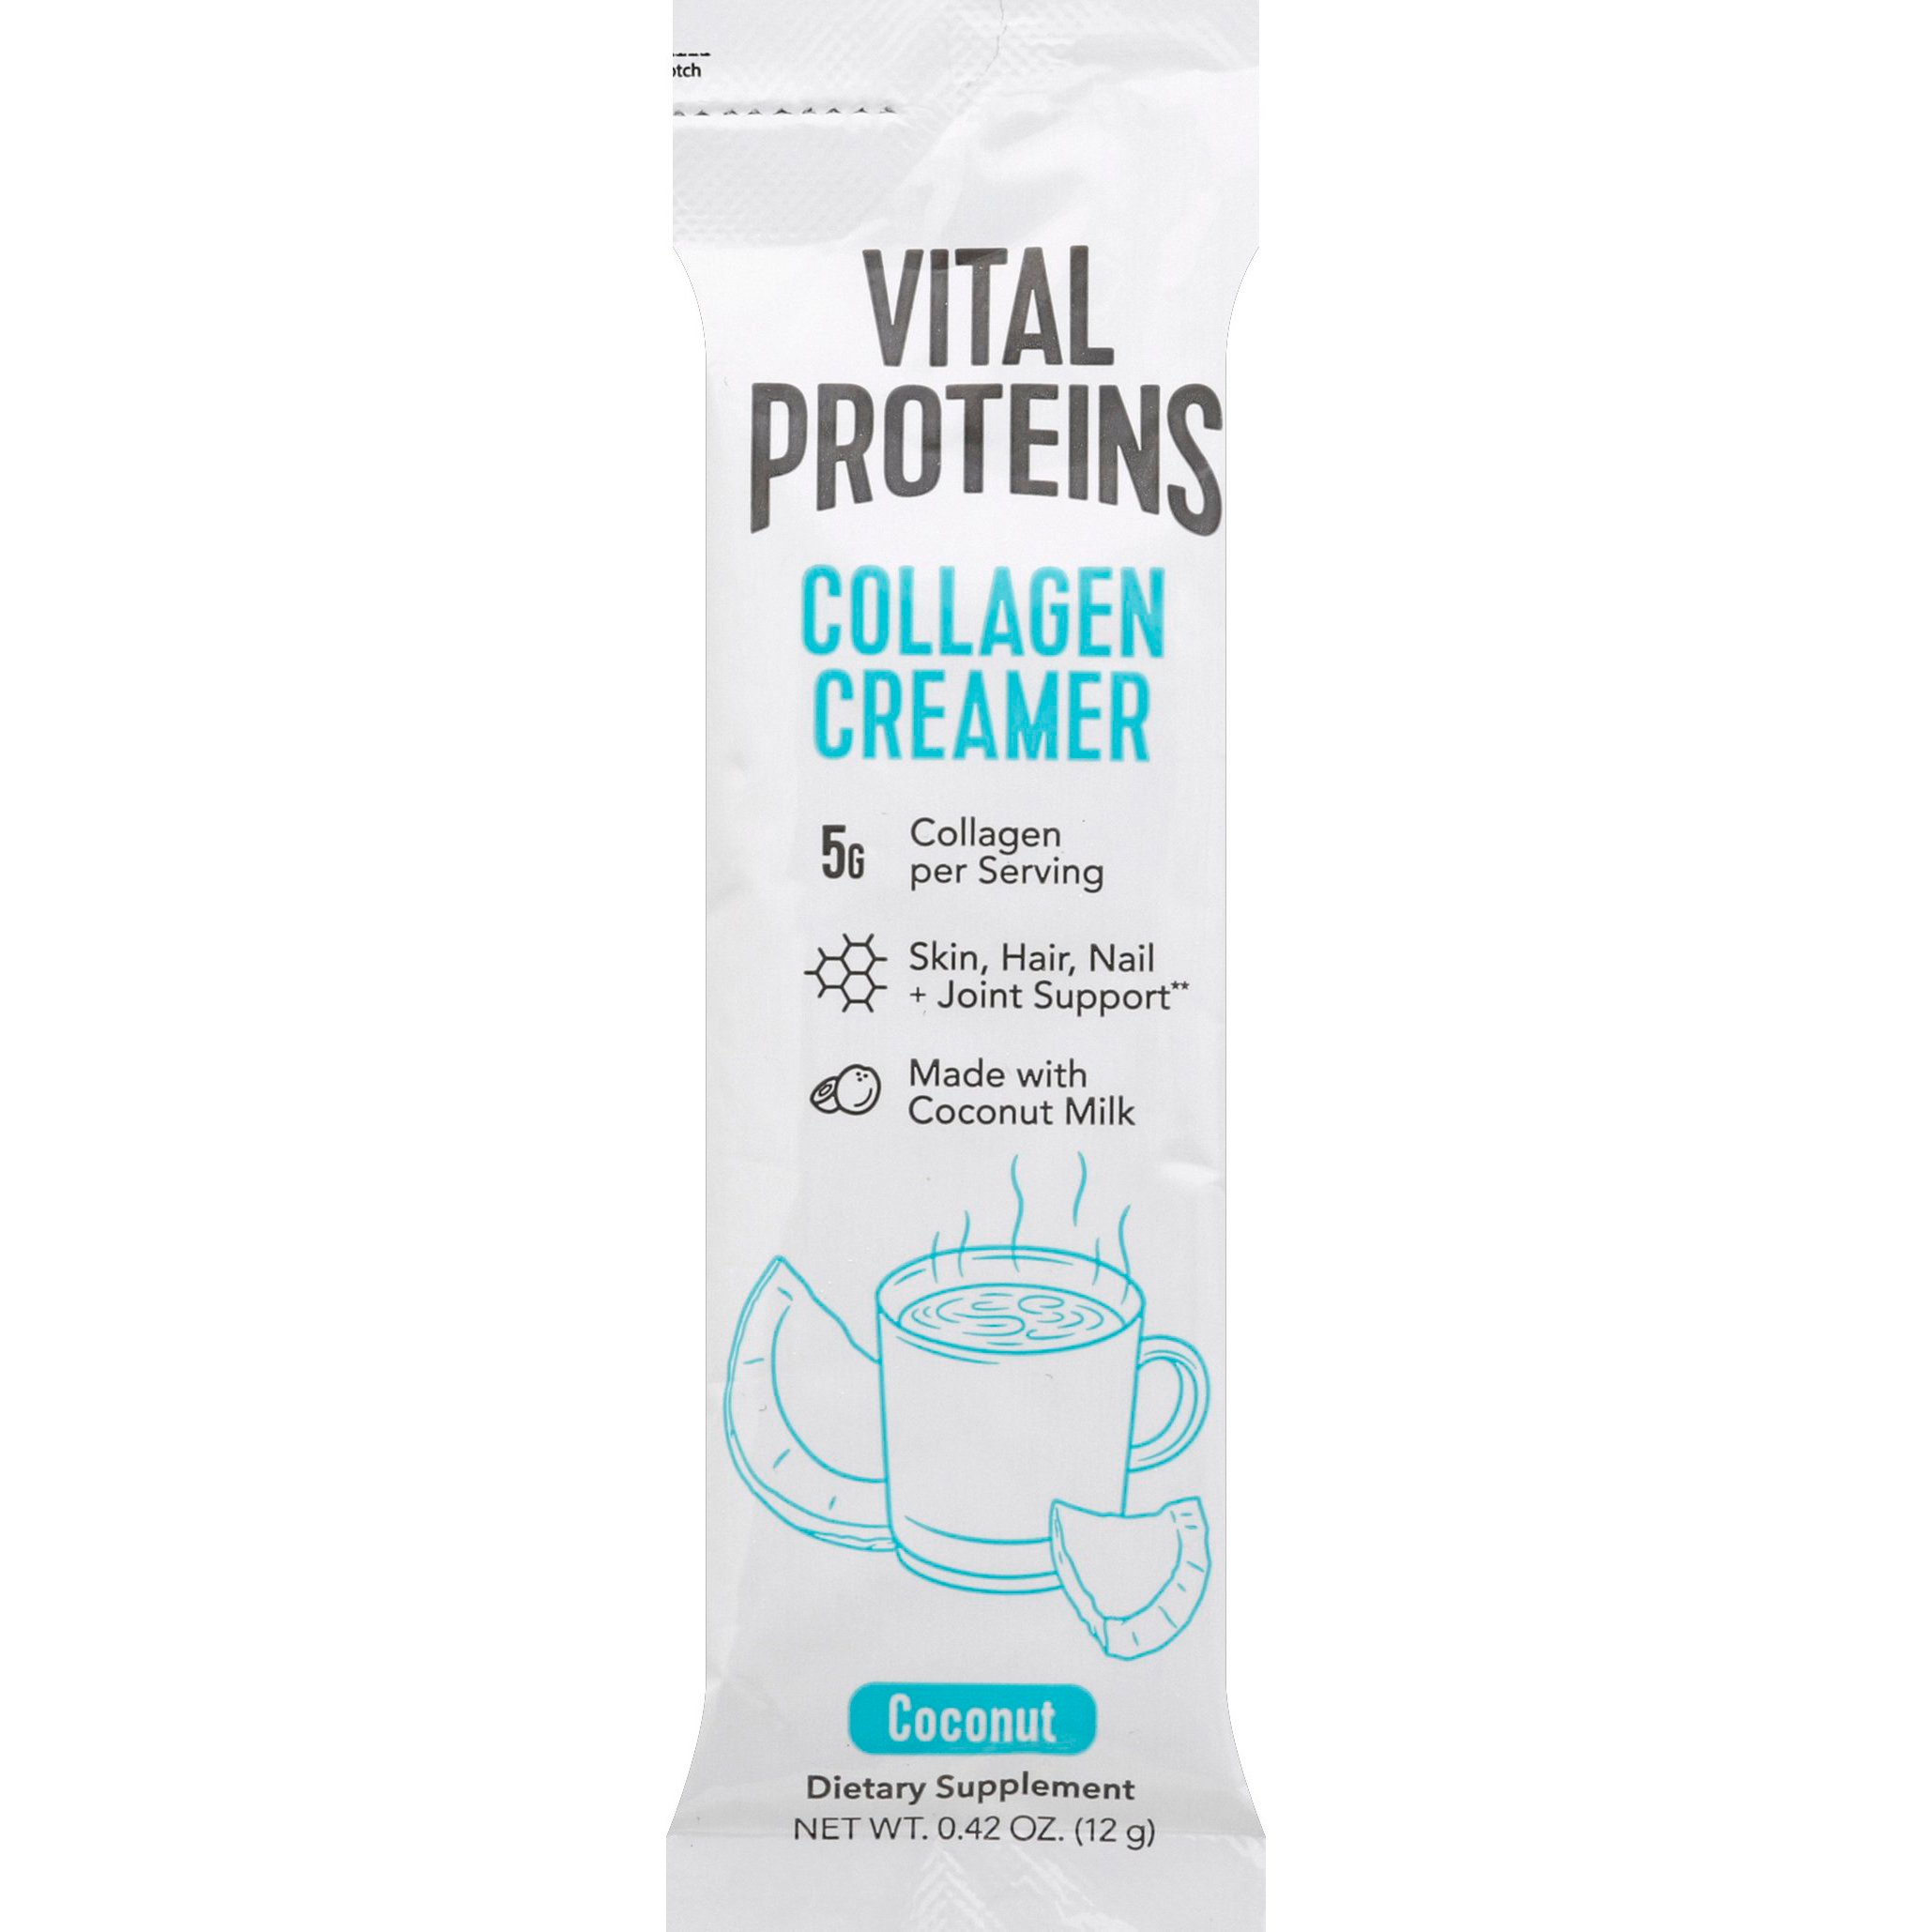 Vital Proteins Collagen Creamer Coconut Stick Packet Shop Diet Fitness At H E B,John Bouvier Kennedy Schlossberg Girlfriend